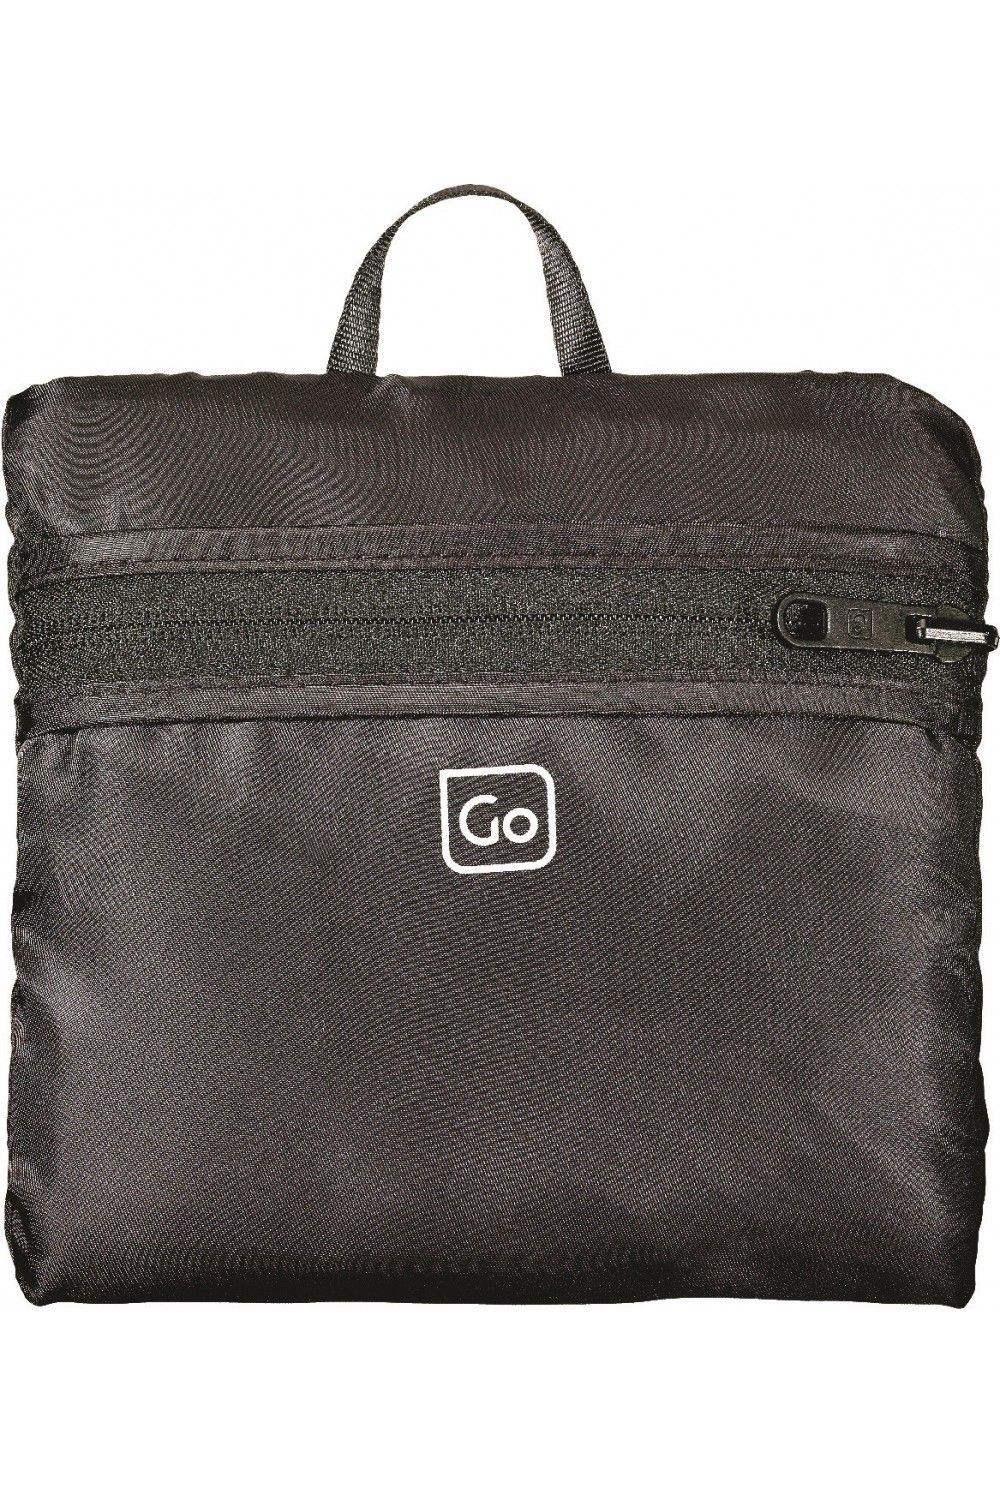 Go Travel Xtra Foldable Travel Bag